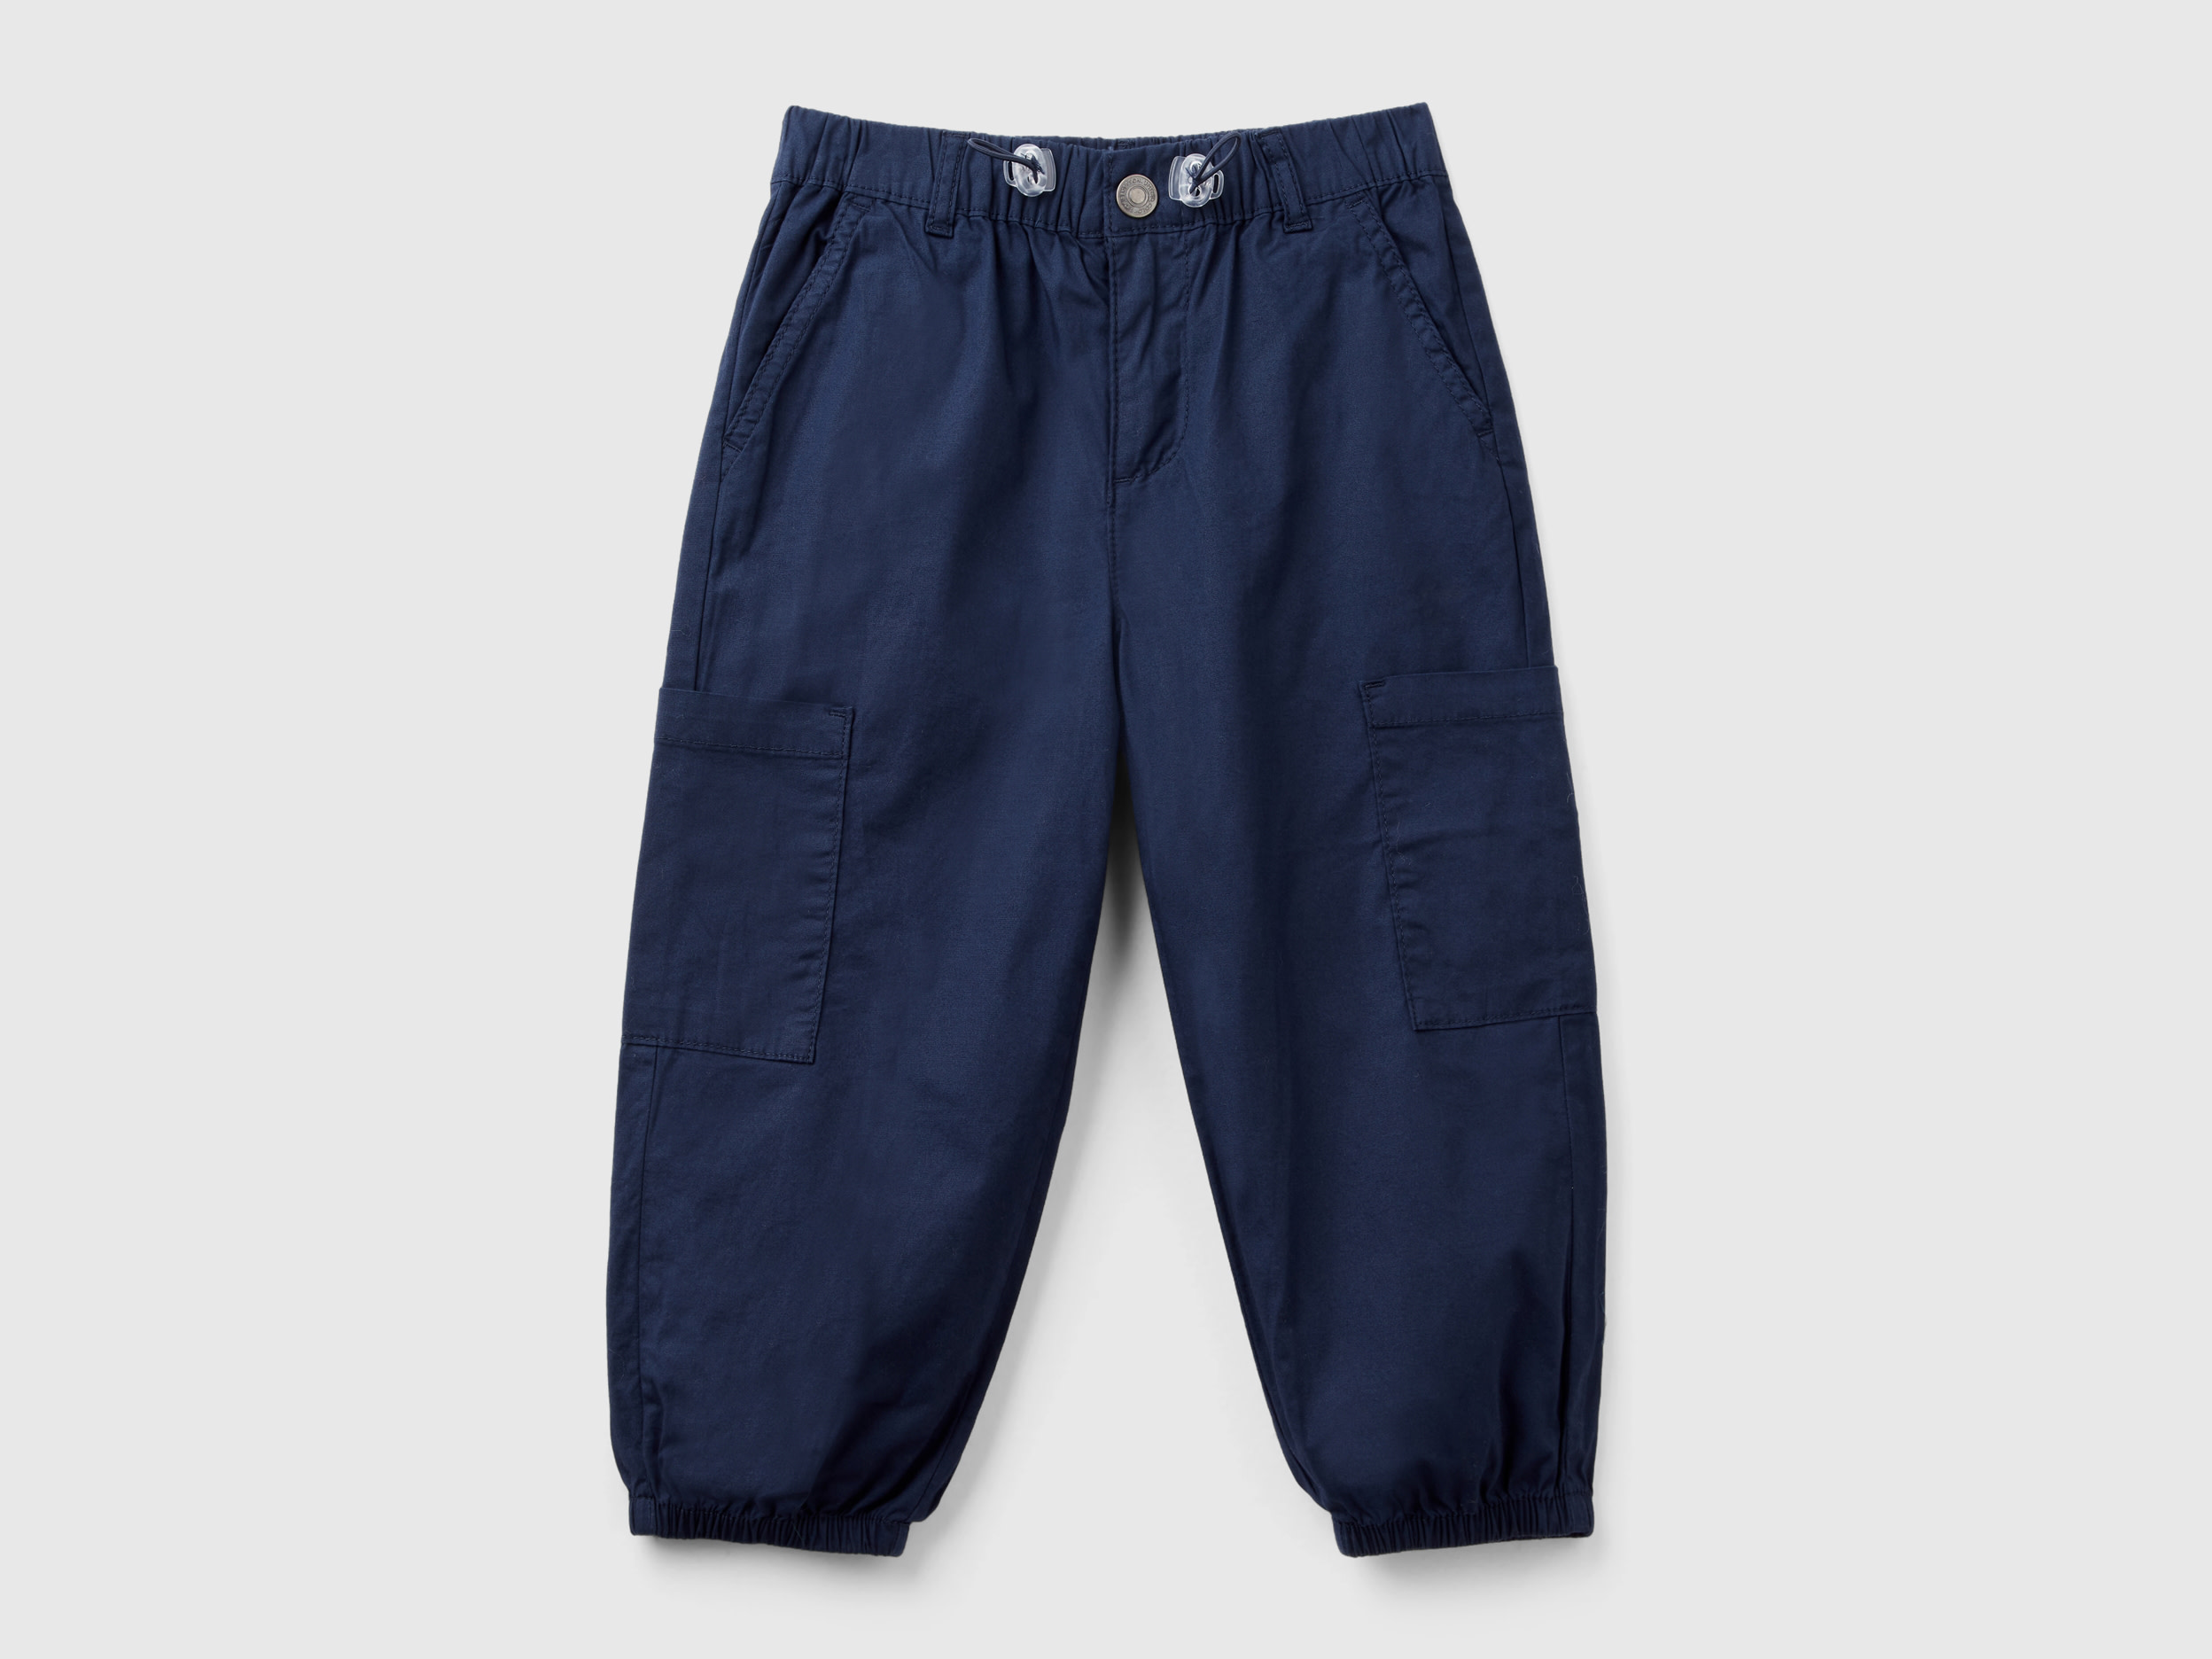 Benetton, Stretch Cotton Parachute Trousers, size 2-3, Dark Blue, Kids